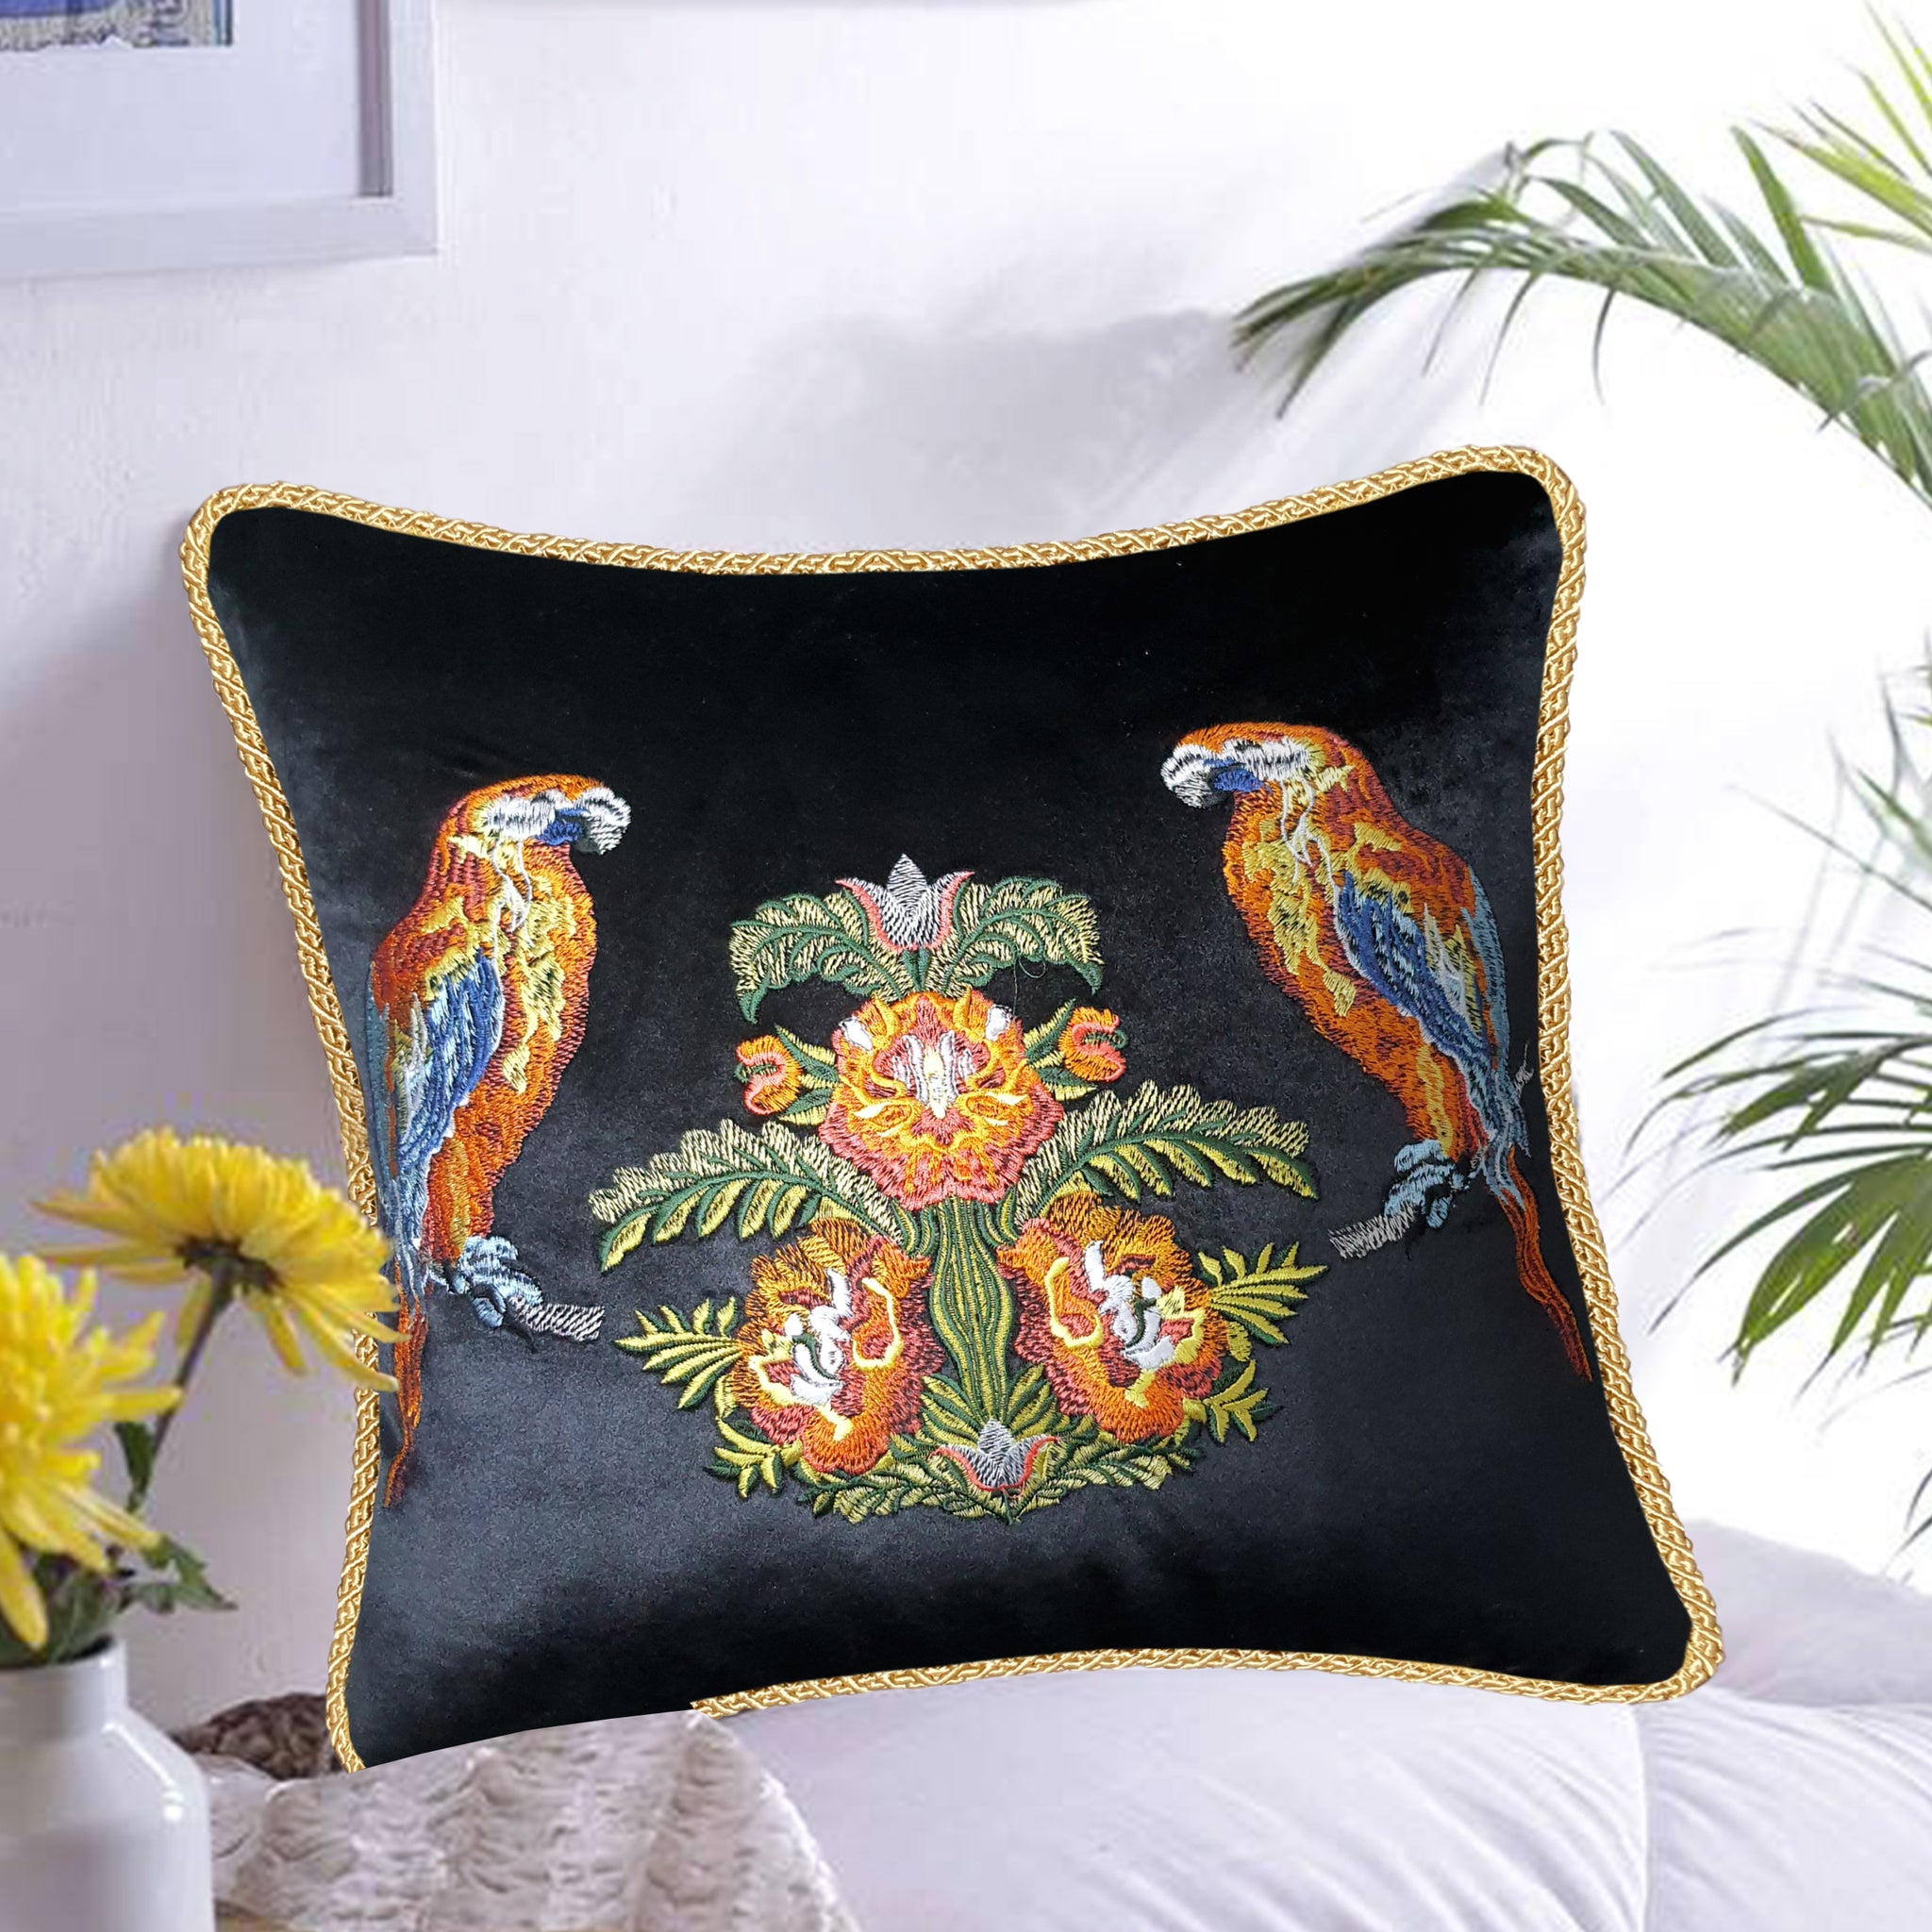  Velvet Cushion Cover Parrot Embroidery Decorative Pillowcase Modern Tropical Birds Home Decor Throw Pillow for Sofa Chair 45x45 cm 